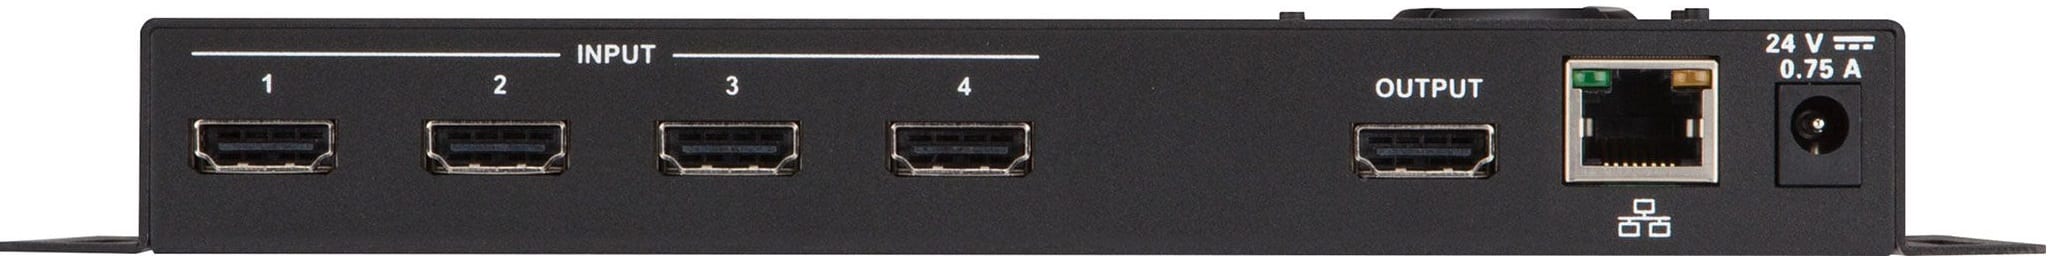 Crestron HD-MD4X1-4K-E - HDMI switch